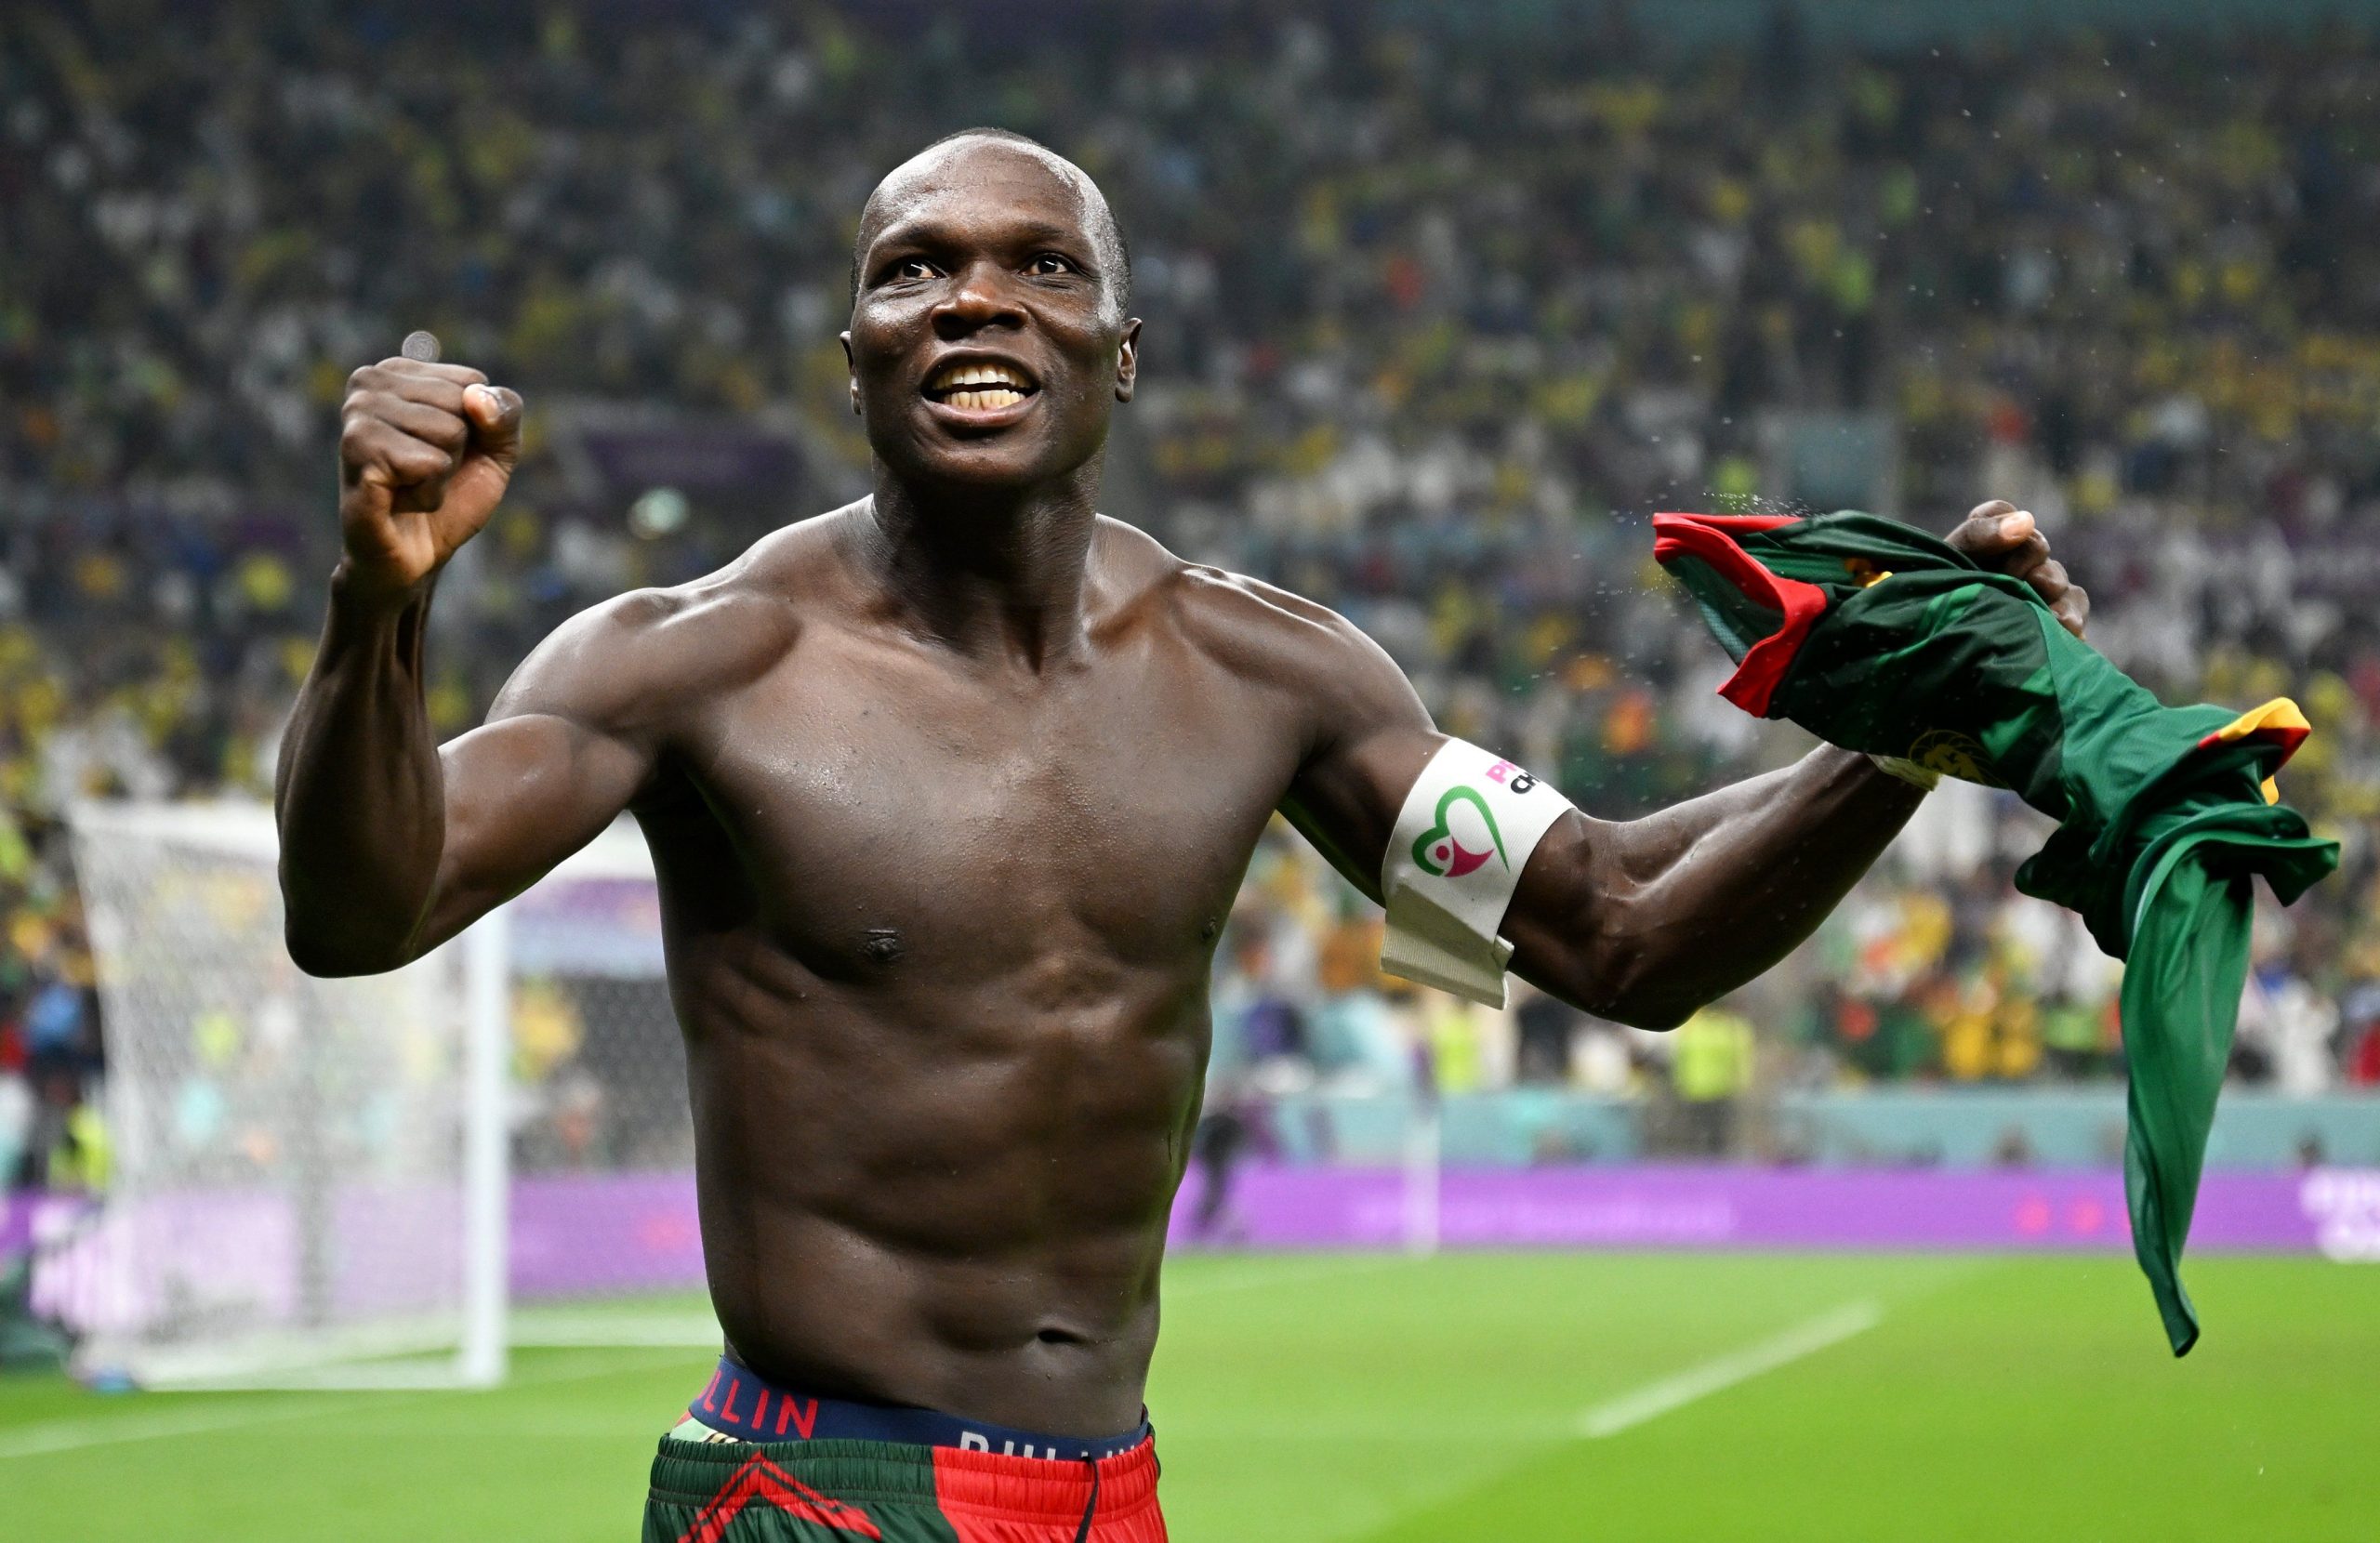 Cameroon’s Vincent Aboubakar shown red card after scoring goal against Brazil, celebrating shirtless: Watch